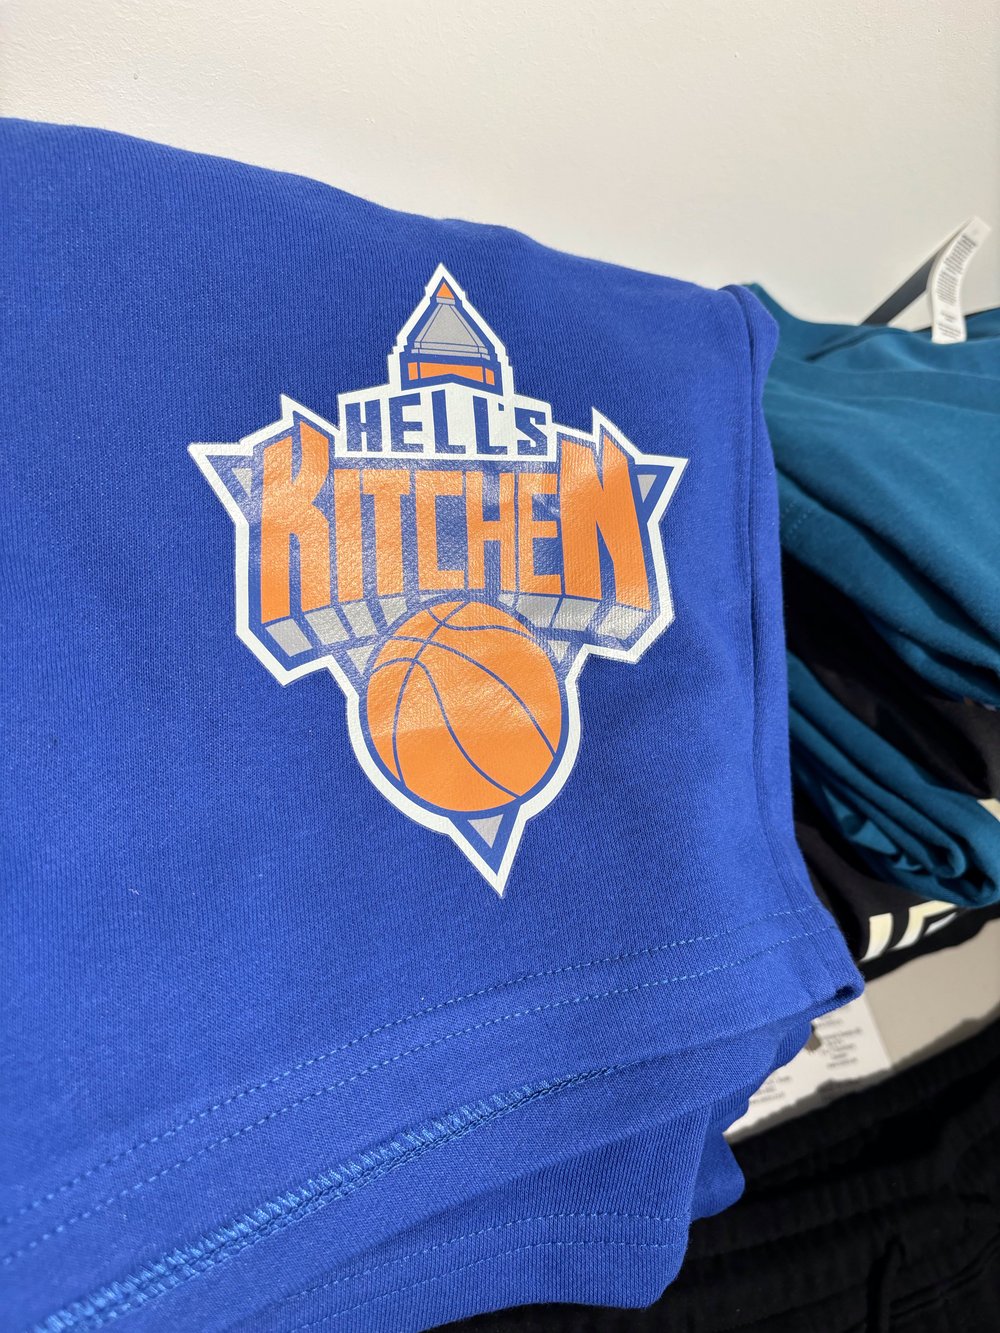 Image of (Blue) Knicks Hells Kitchen Shorts